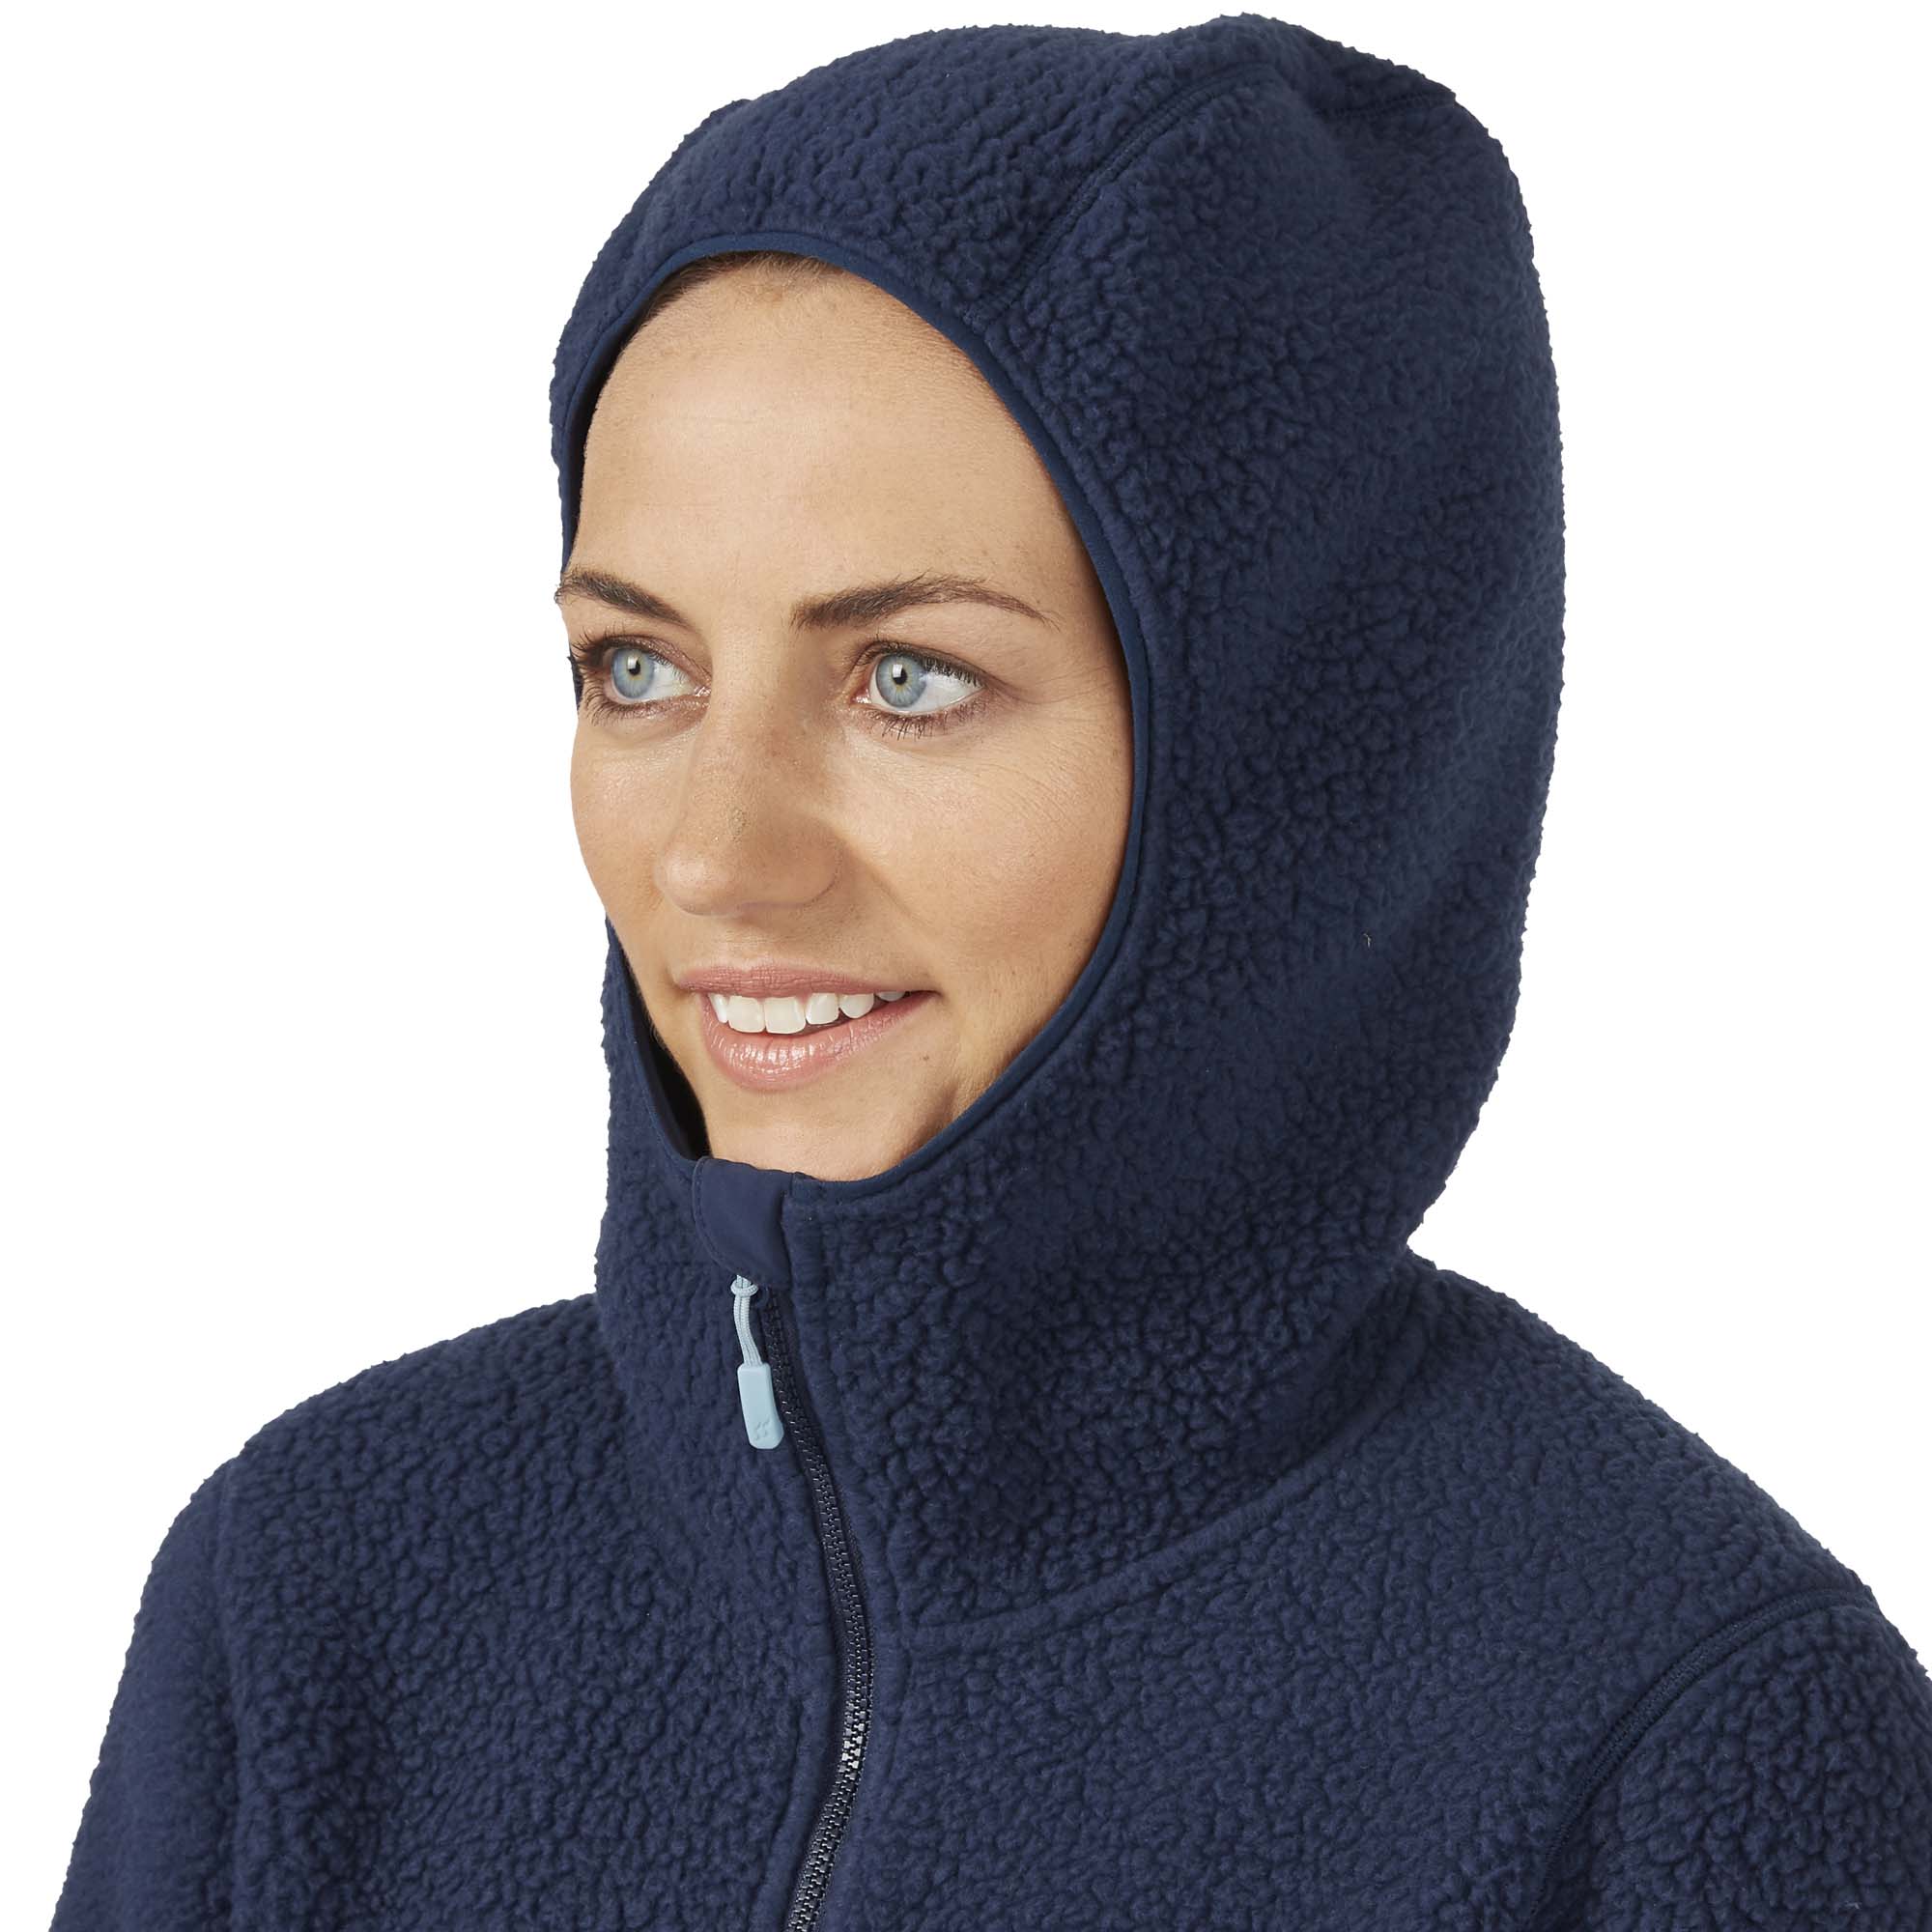 Rab Shearling Hoody Women's Full Zip Fleece Jacket